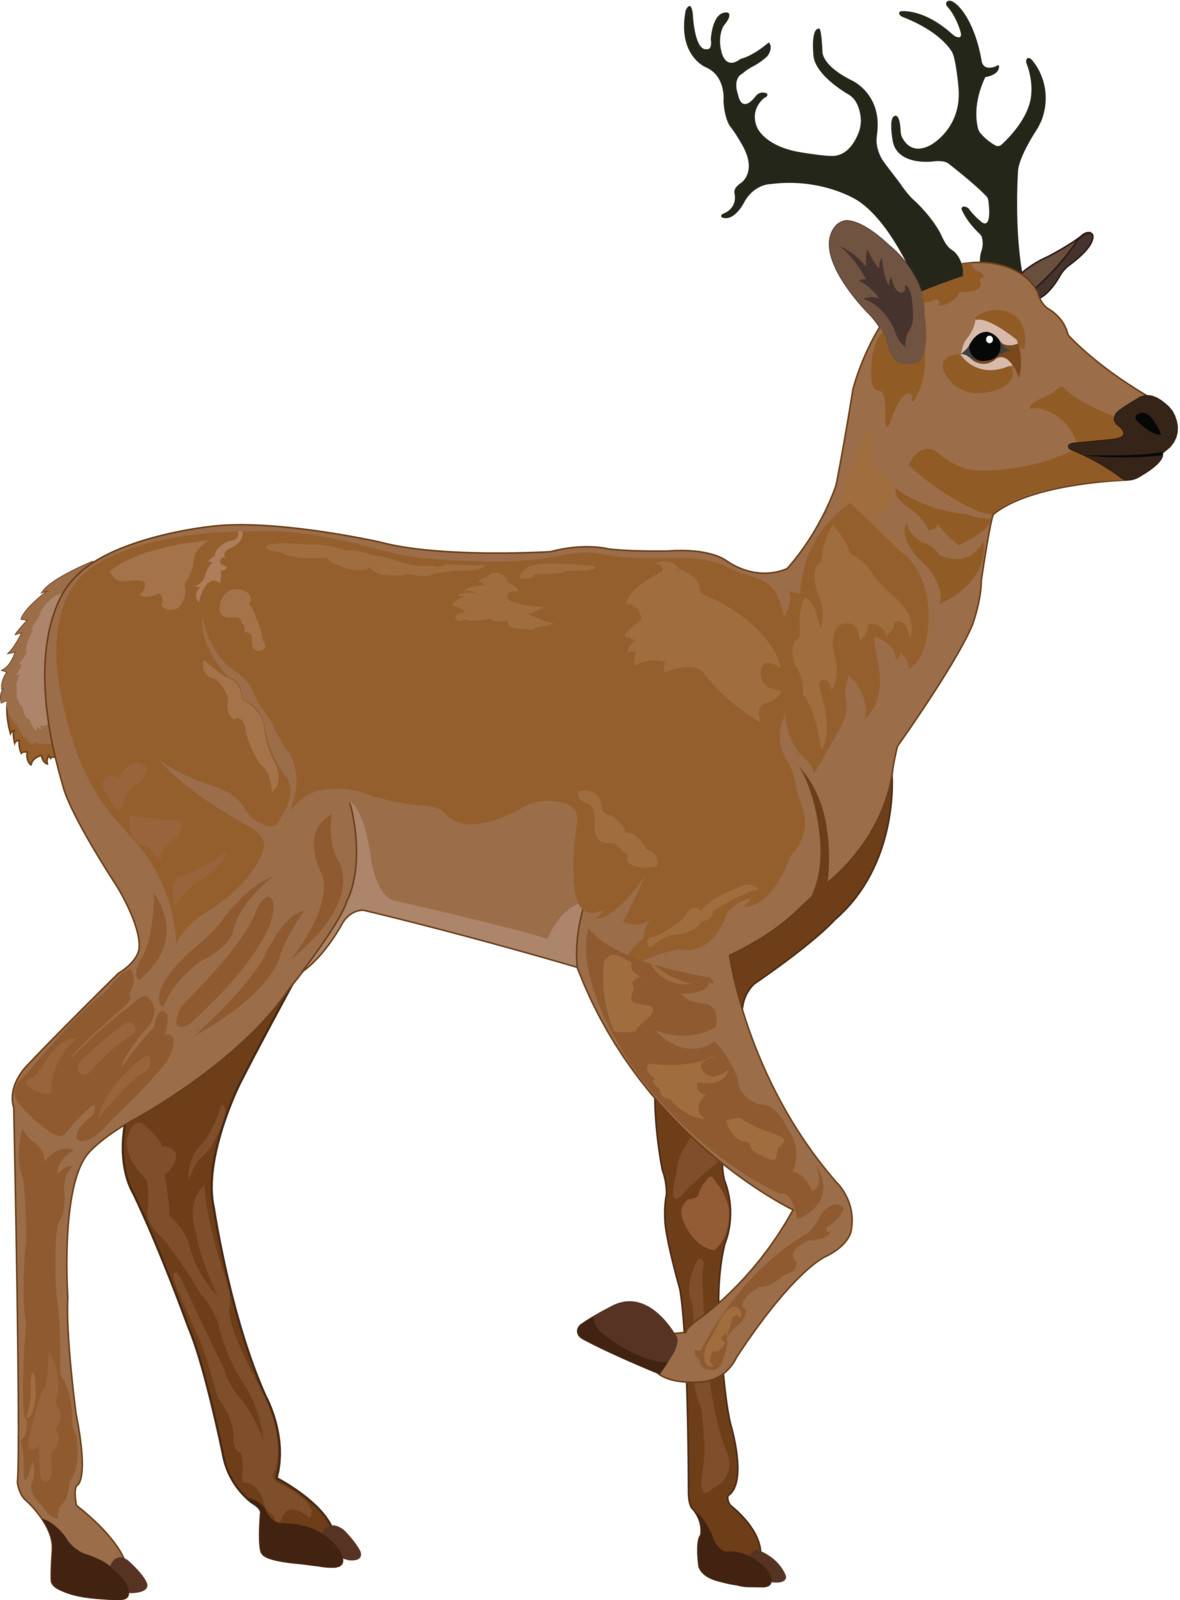 Deer, Buck, Brown, Male, vector illustration